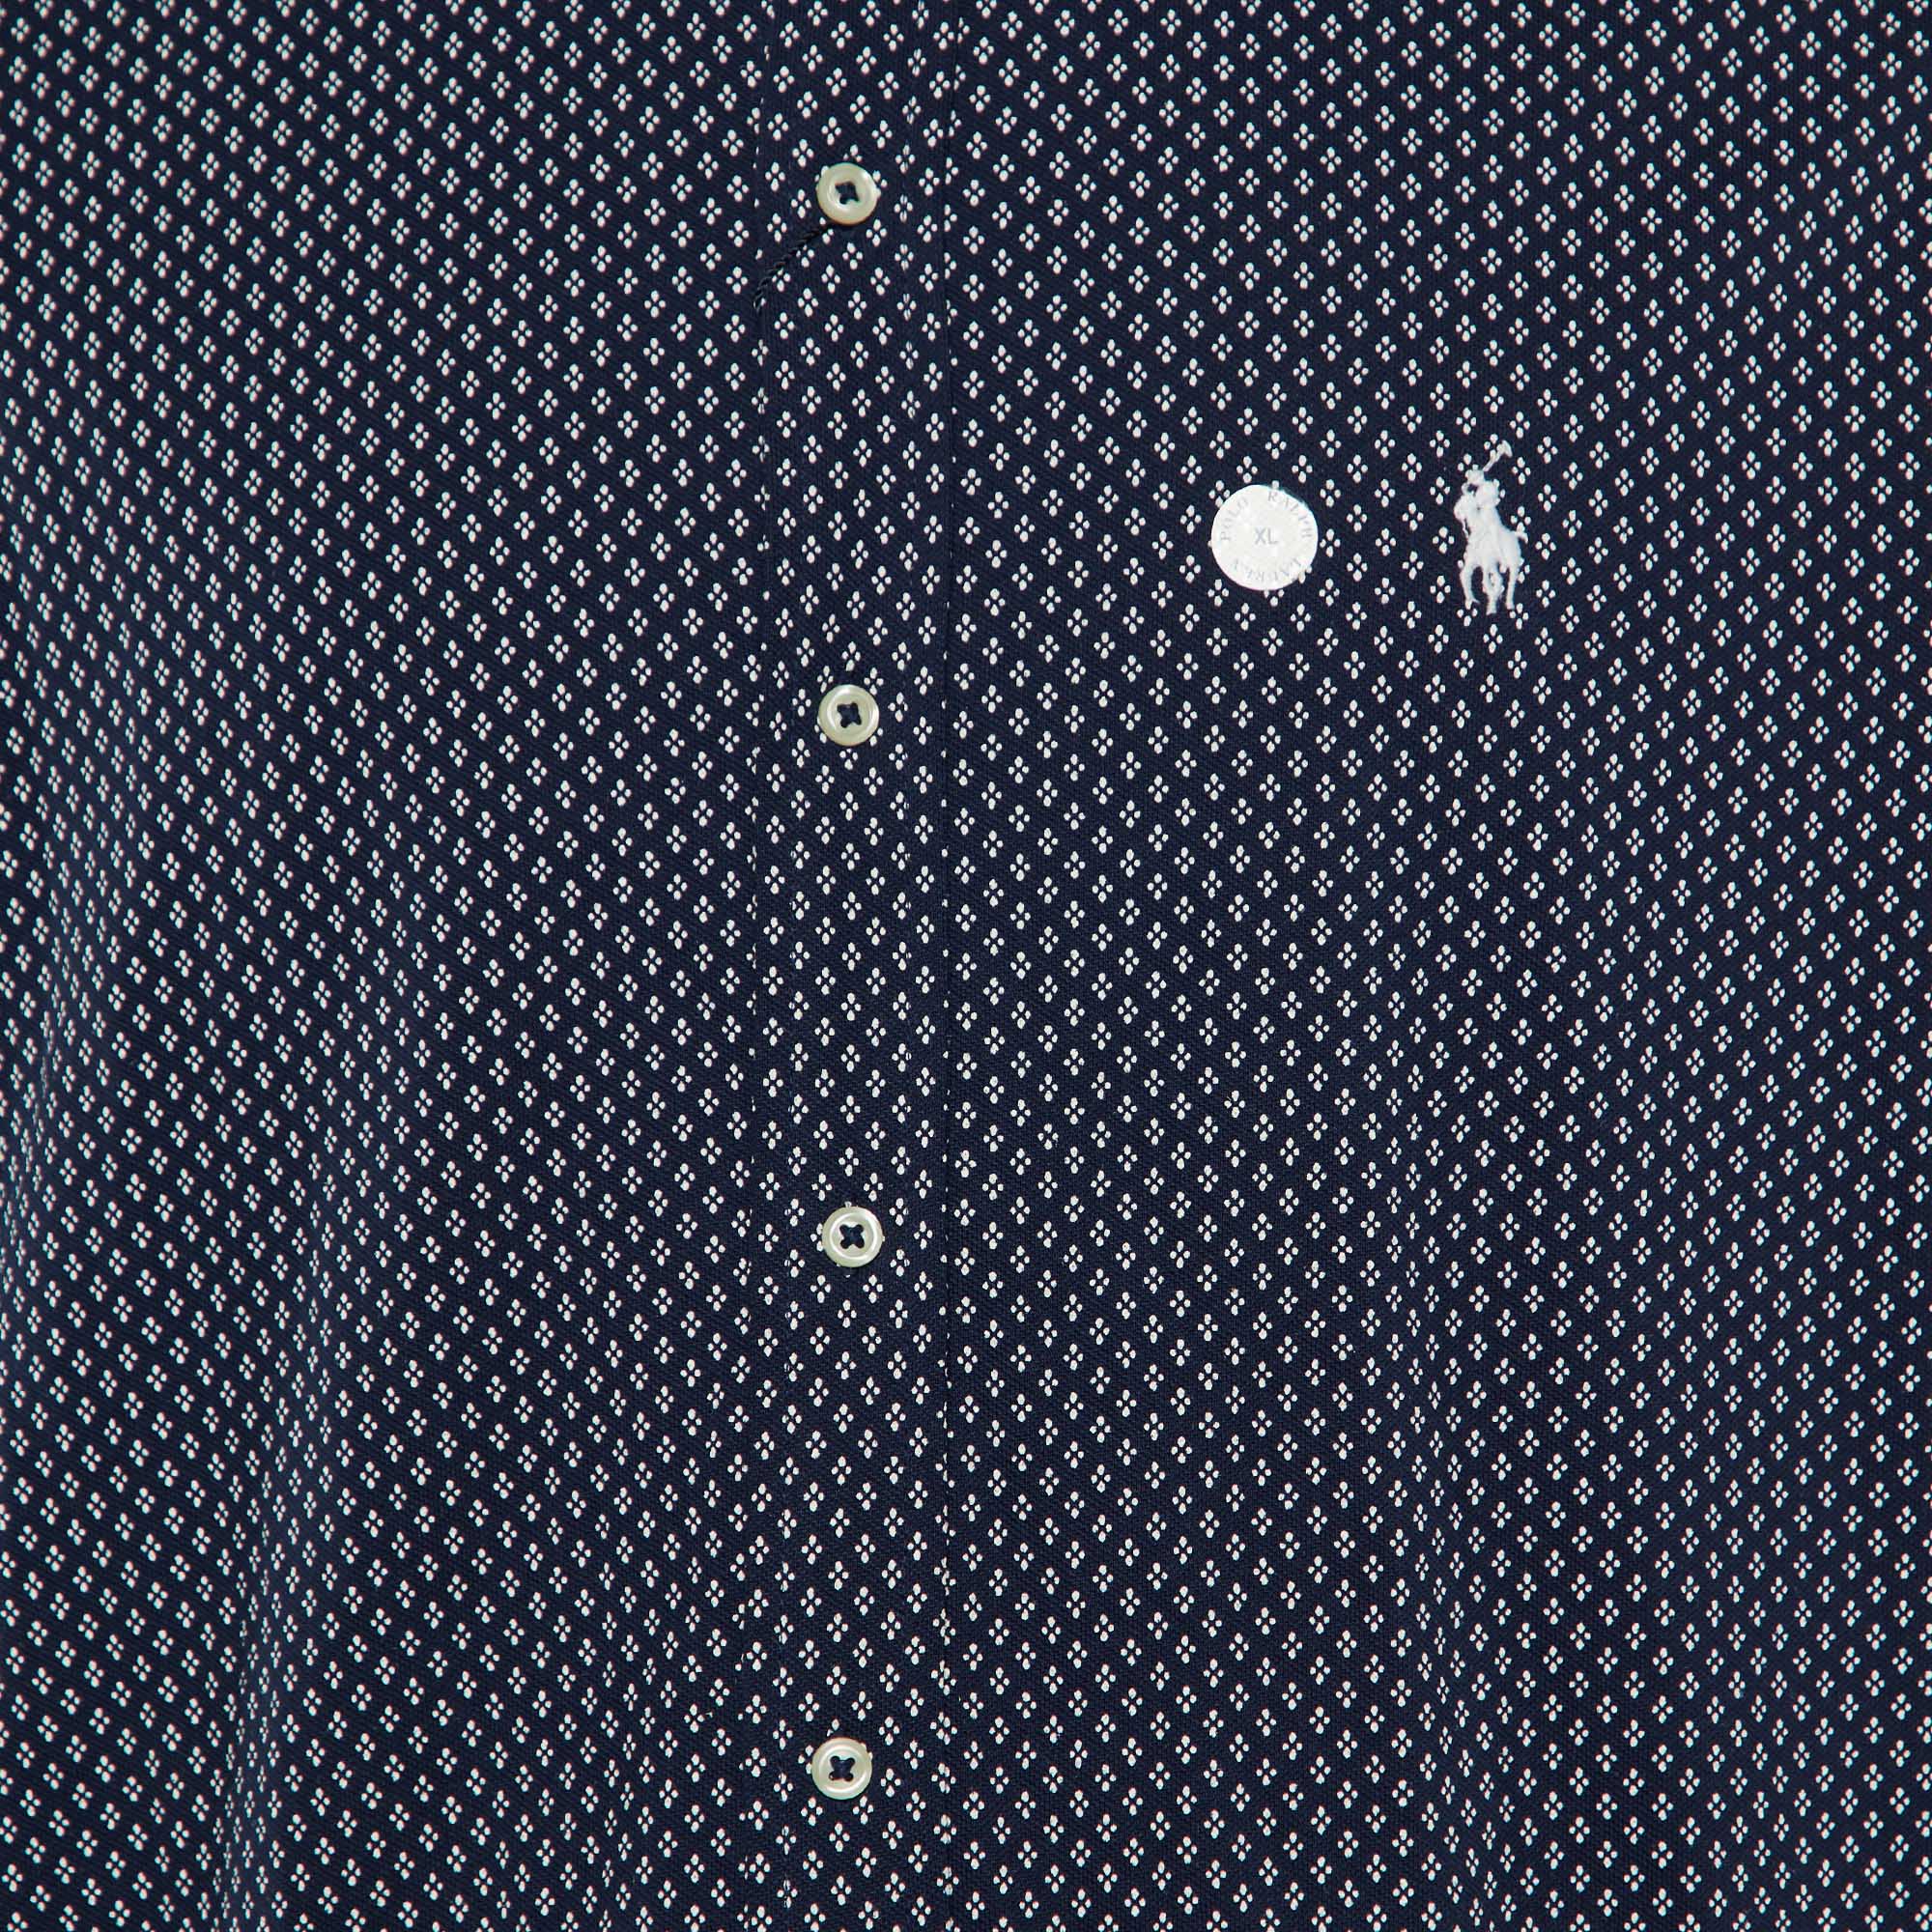 Polo Ralph Lauren Navy Blue Printed Cotton Button Down Full Sleeve Shirt XL